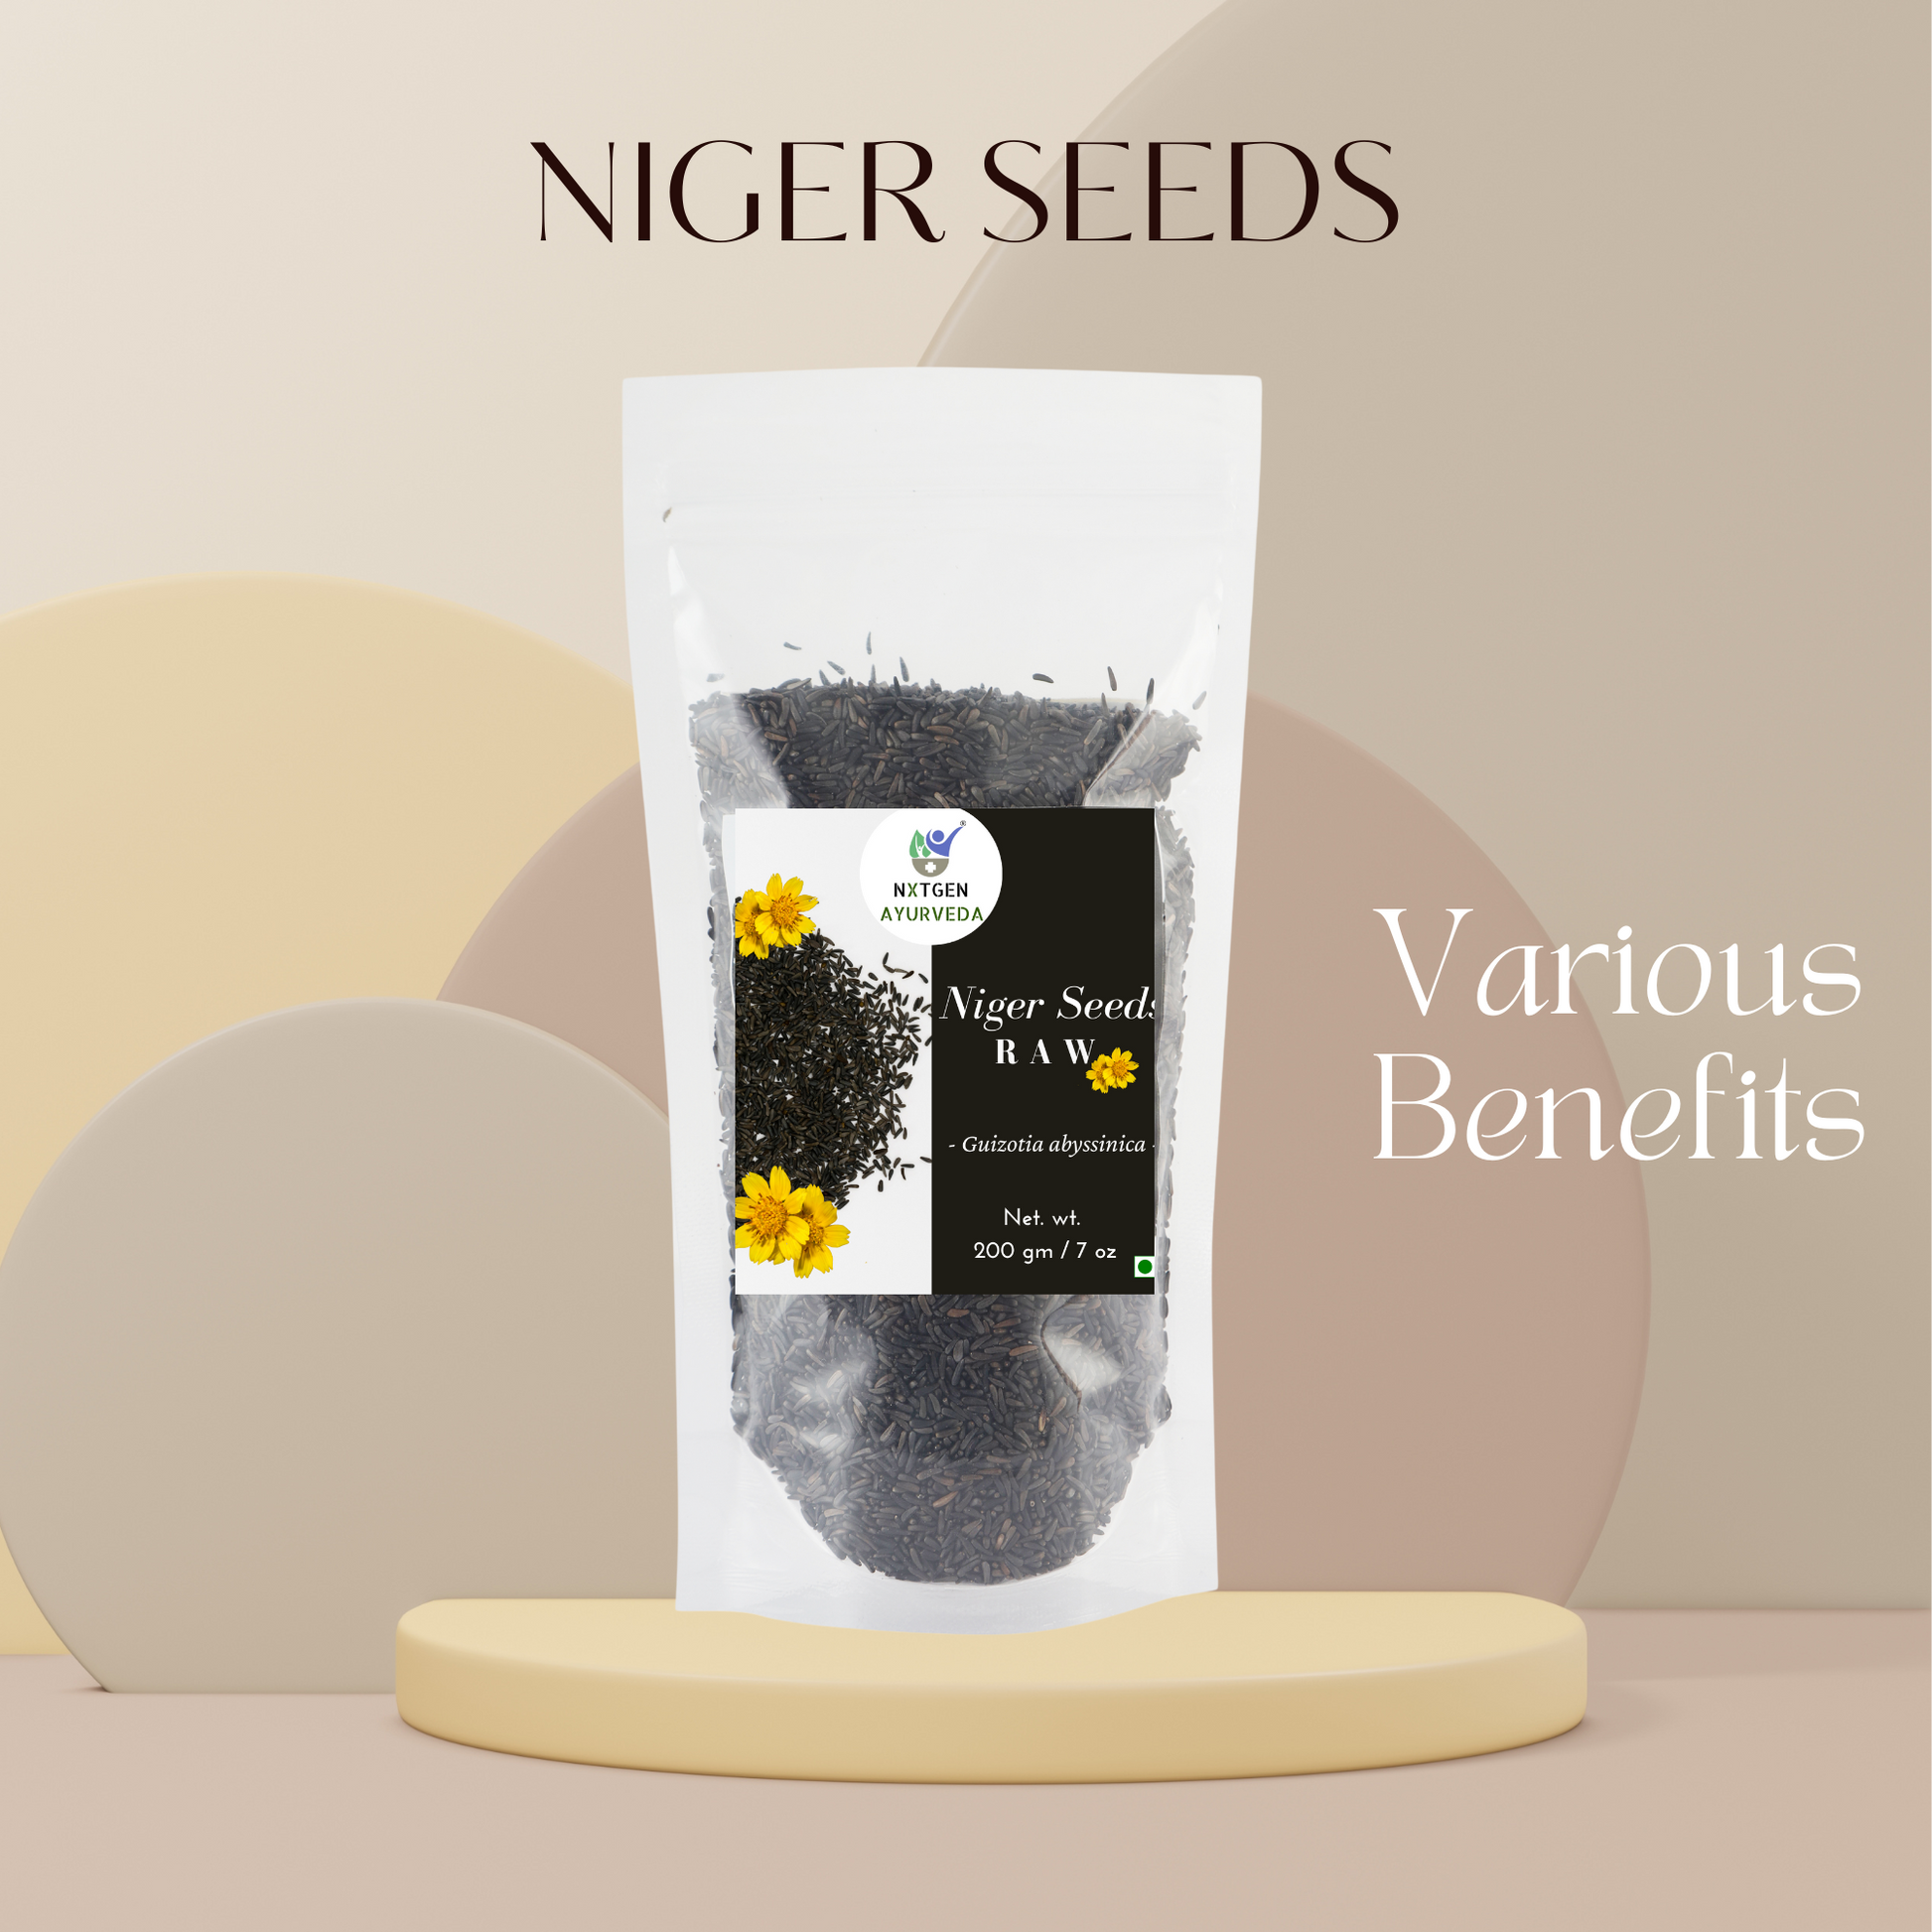 Benefits of niger seeds